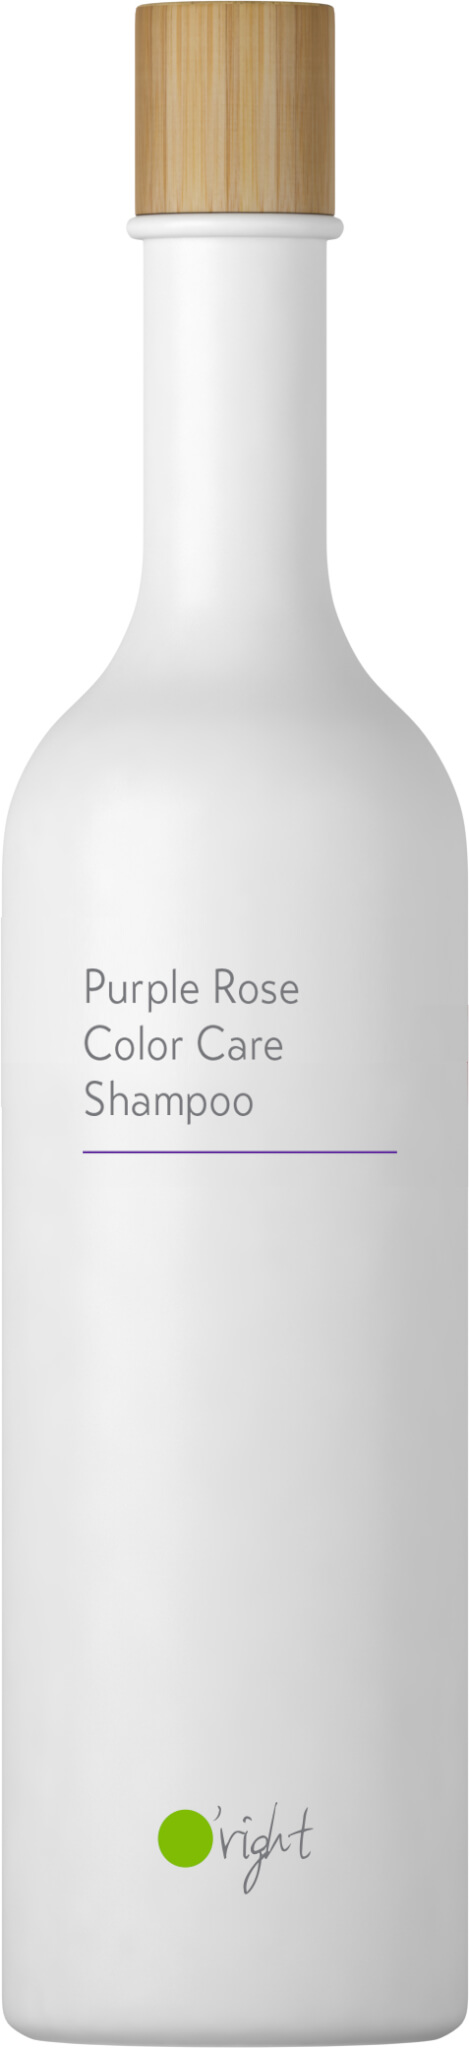 Purple Rose Color Care Shampoo 400ml 2020